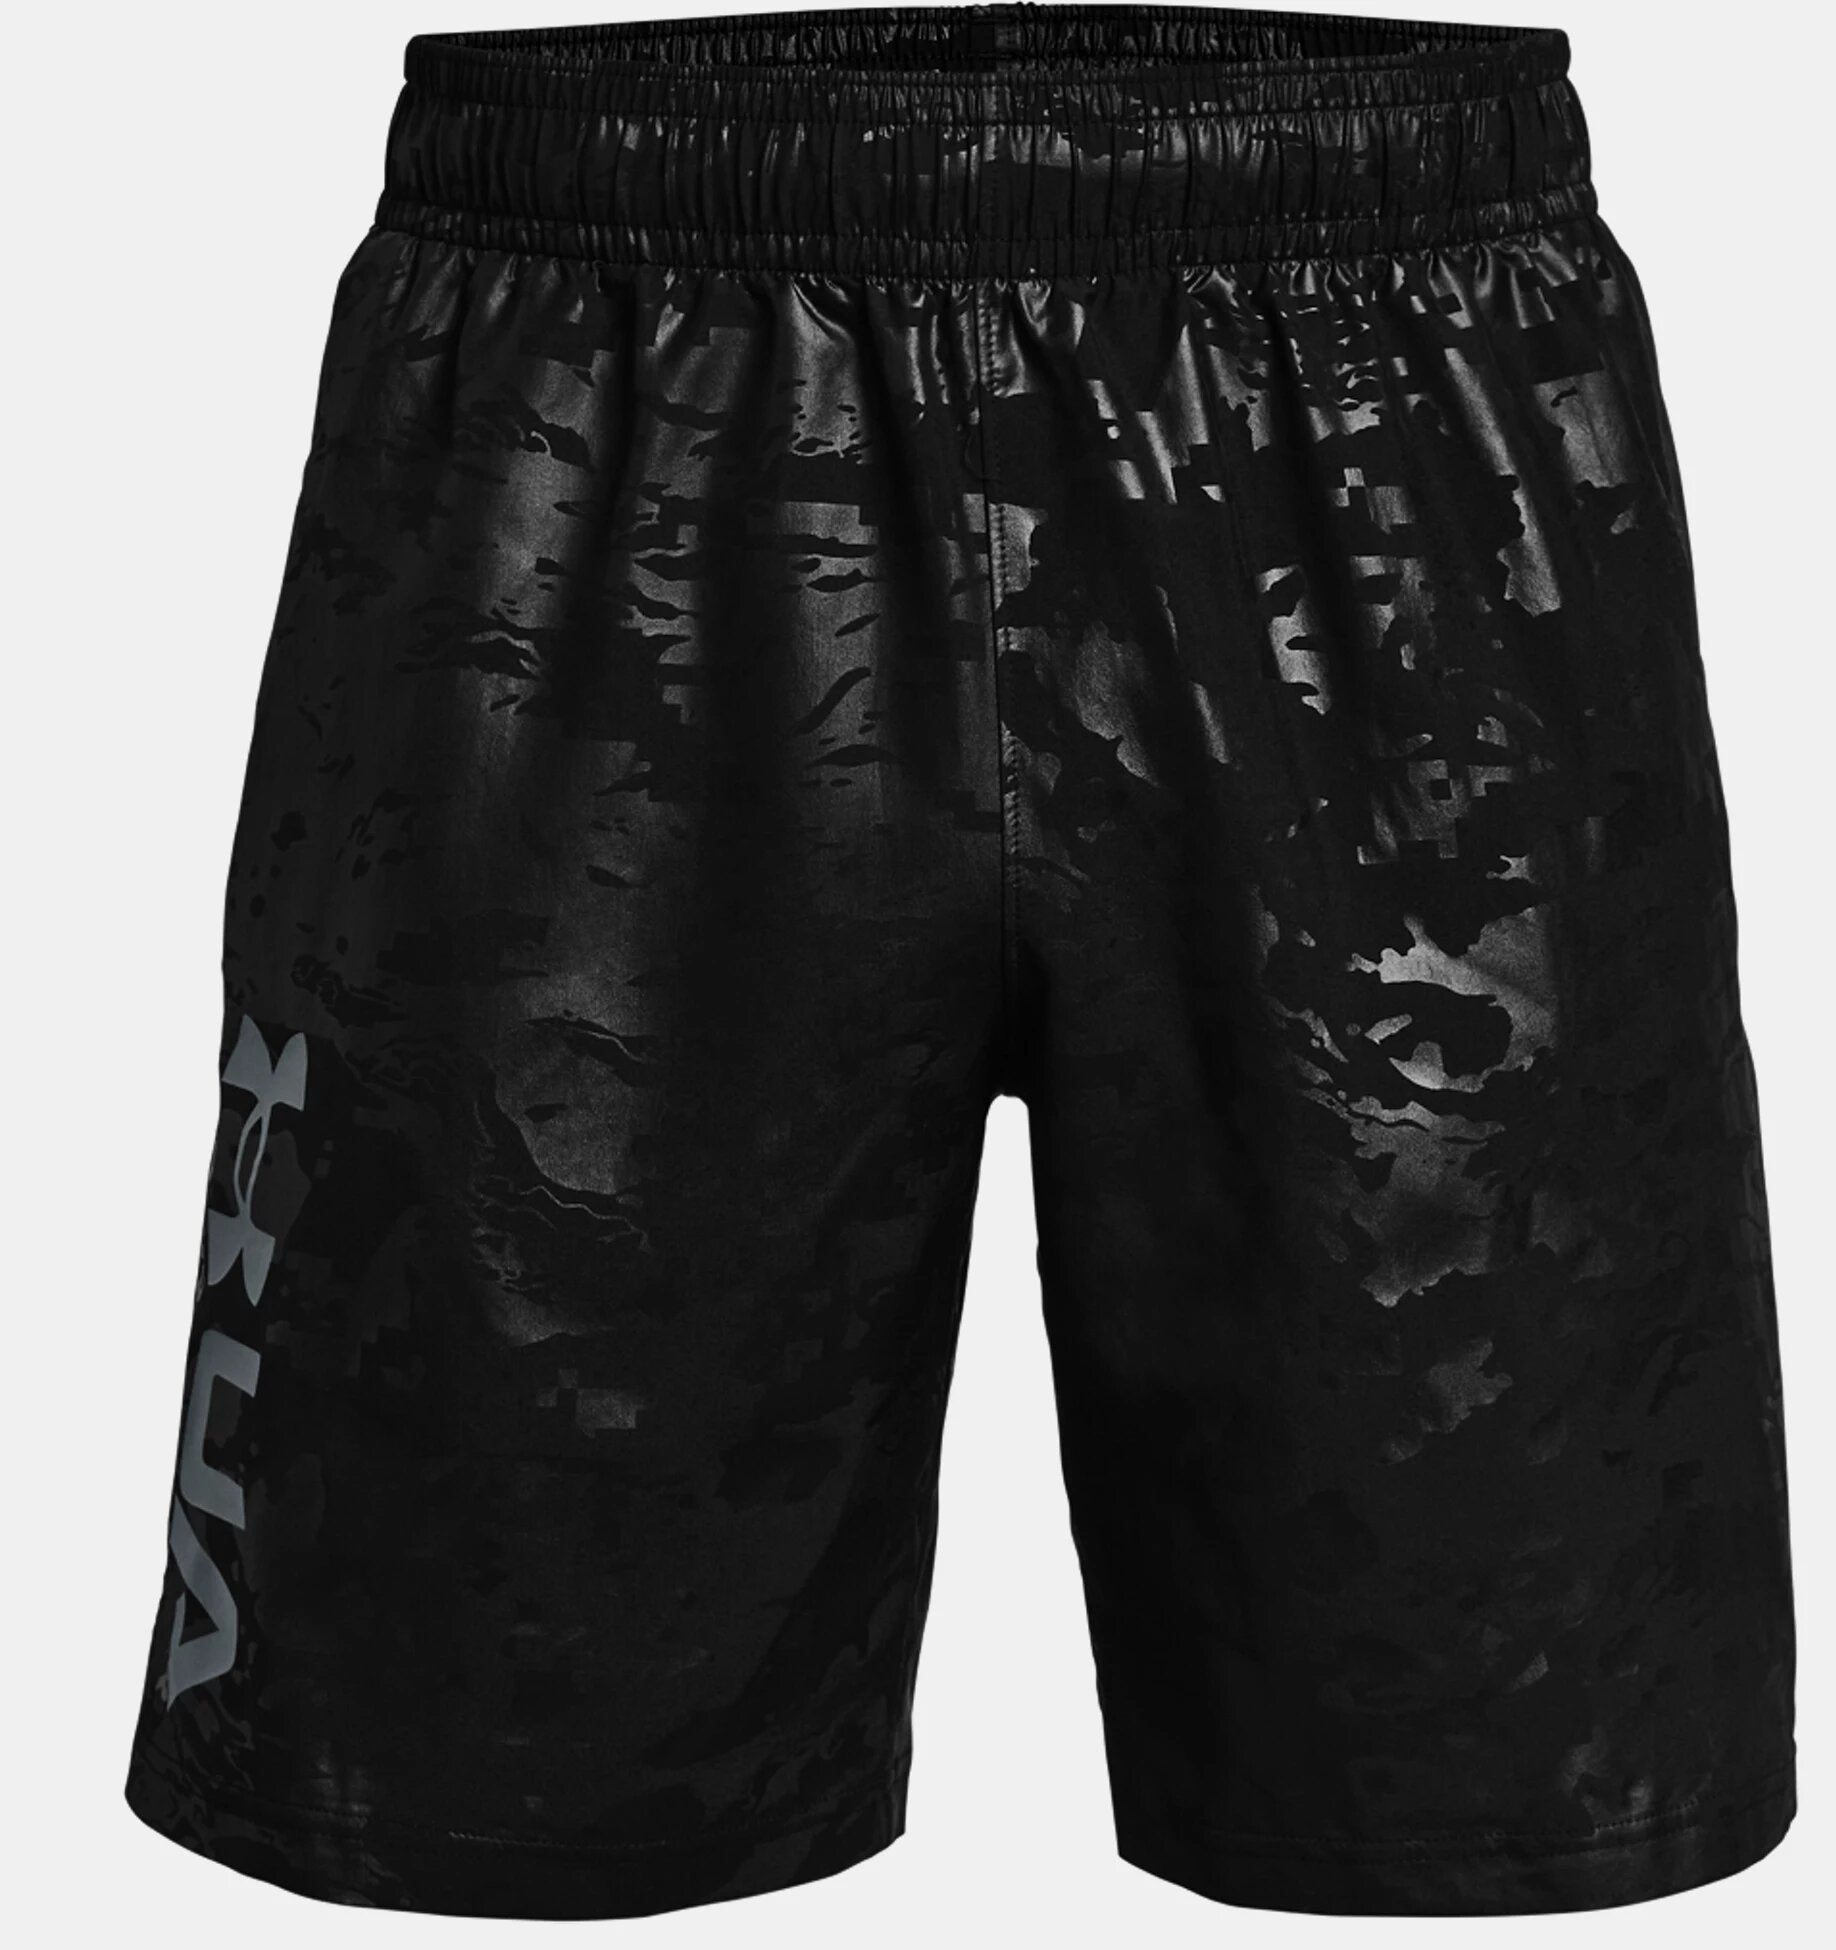 Under Armor Emboss Shorts - Black